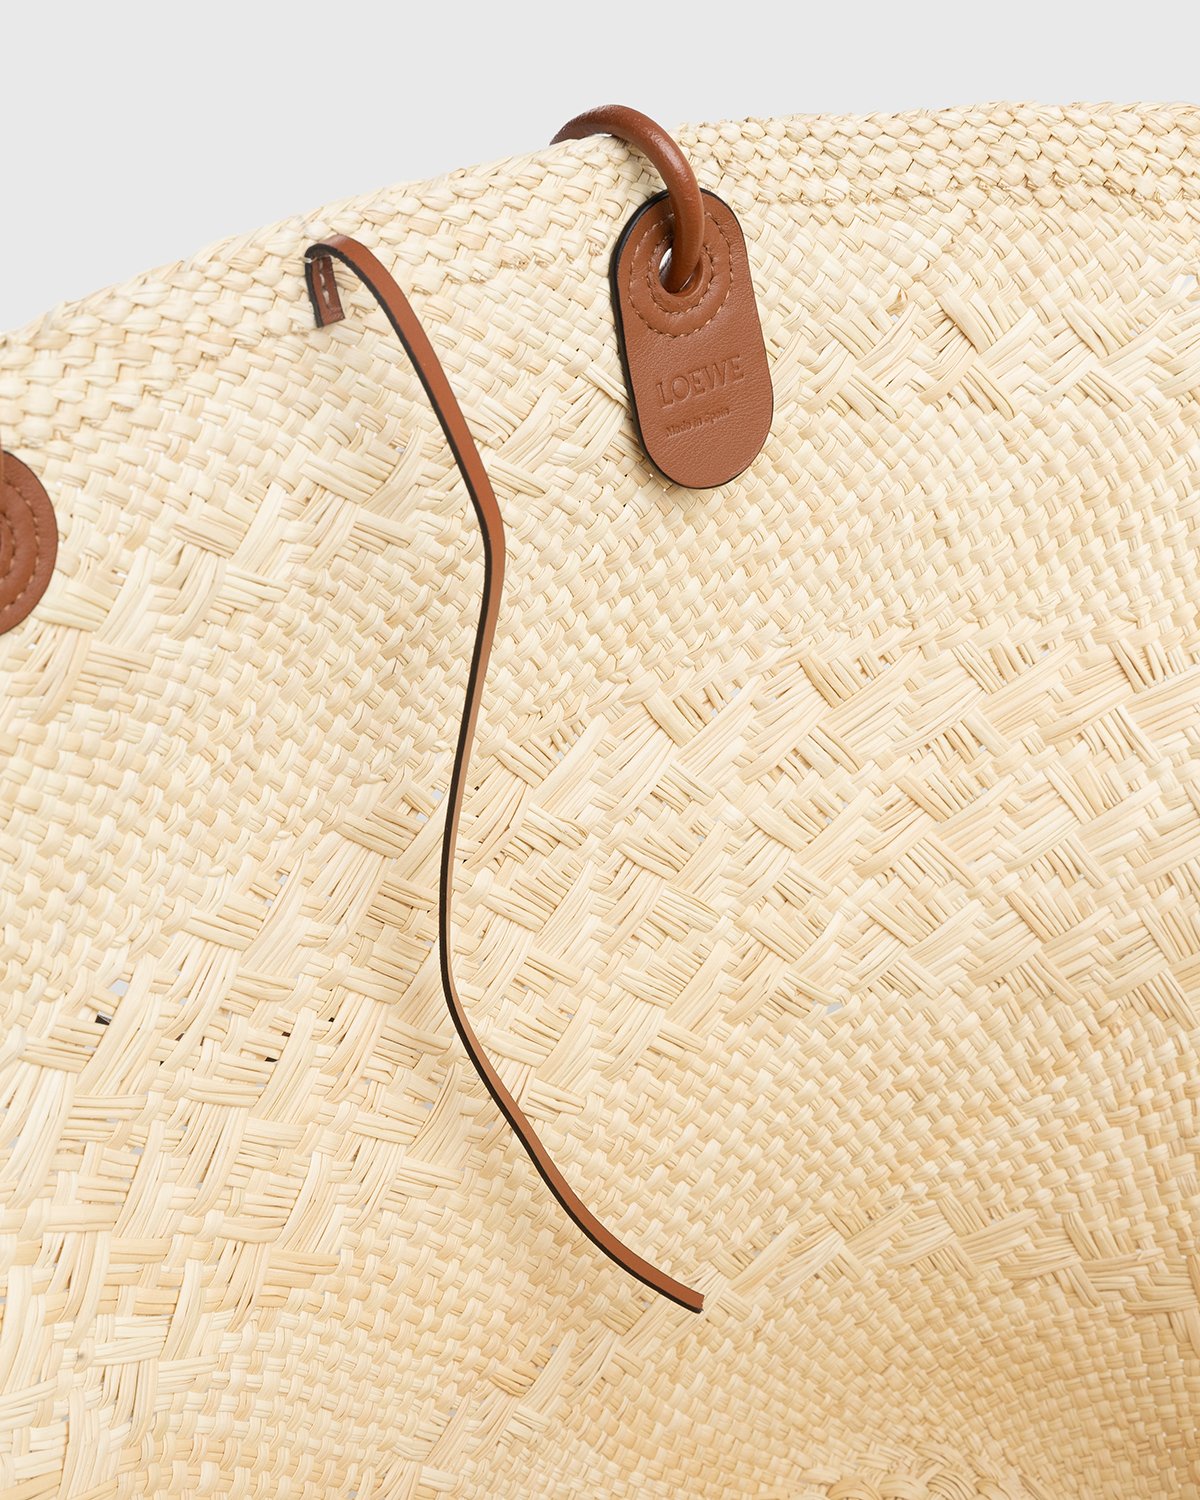 Loewe - Paula's Ibiza Large Anagram Basket Bag Natural/Tan - Accessories - Beige - Image 4